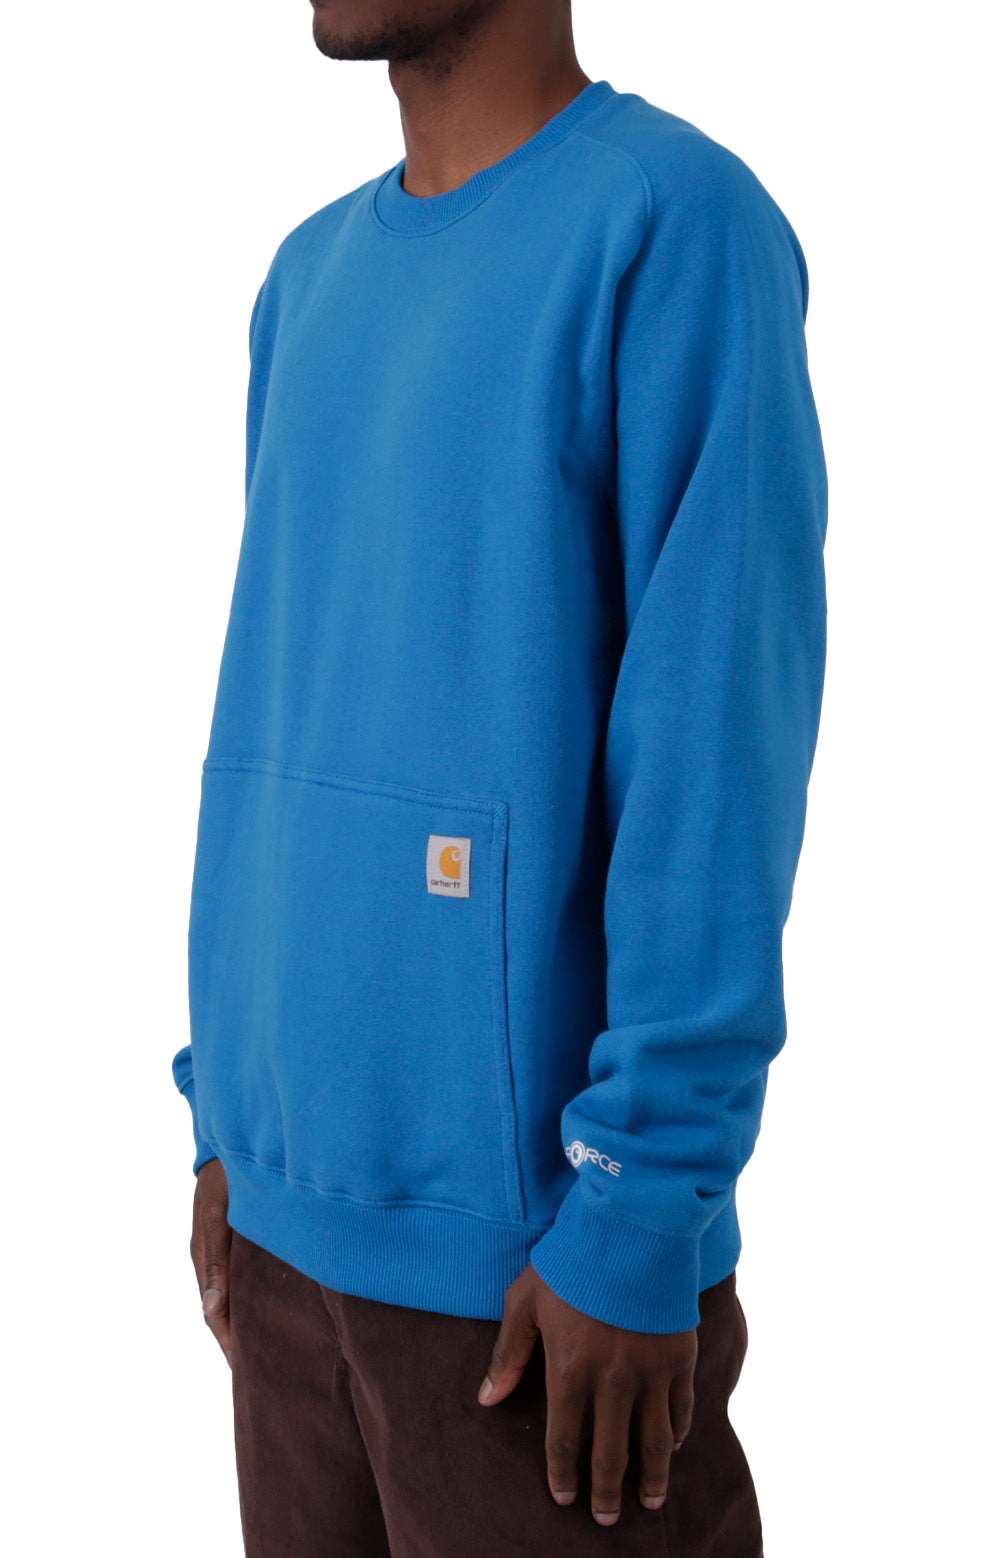 (105568) Force Relaxed Fit Lightweight Crewneck Sweatshirt - Marine Blue